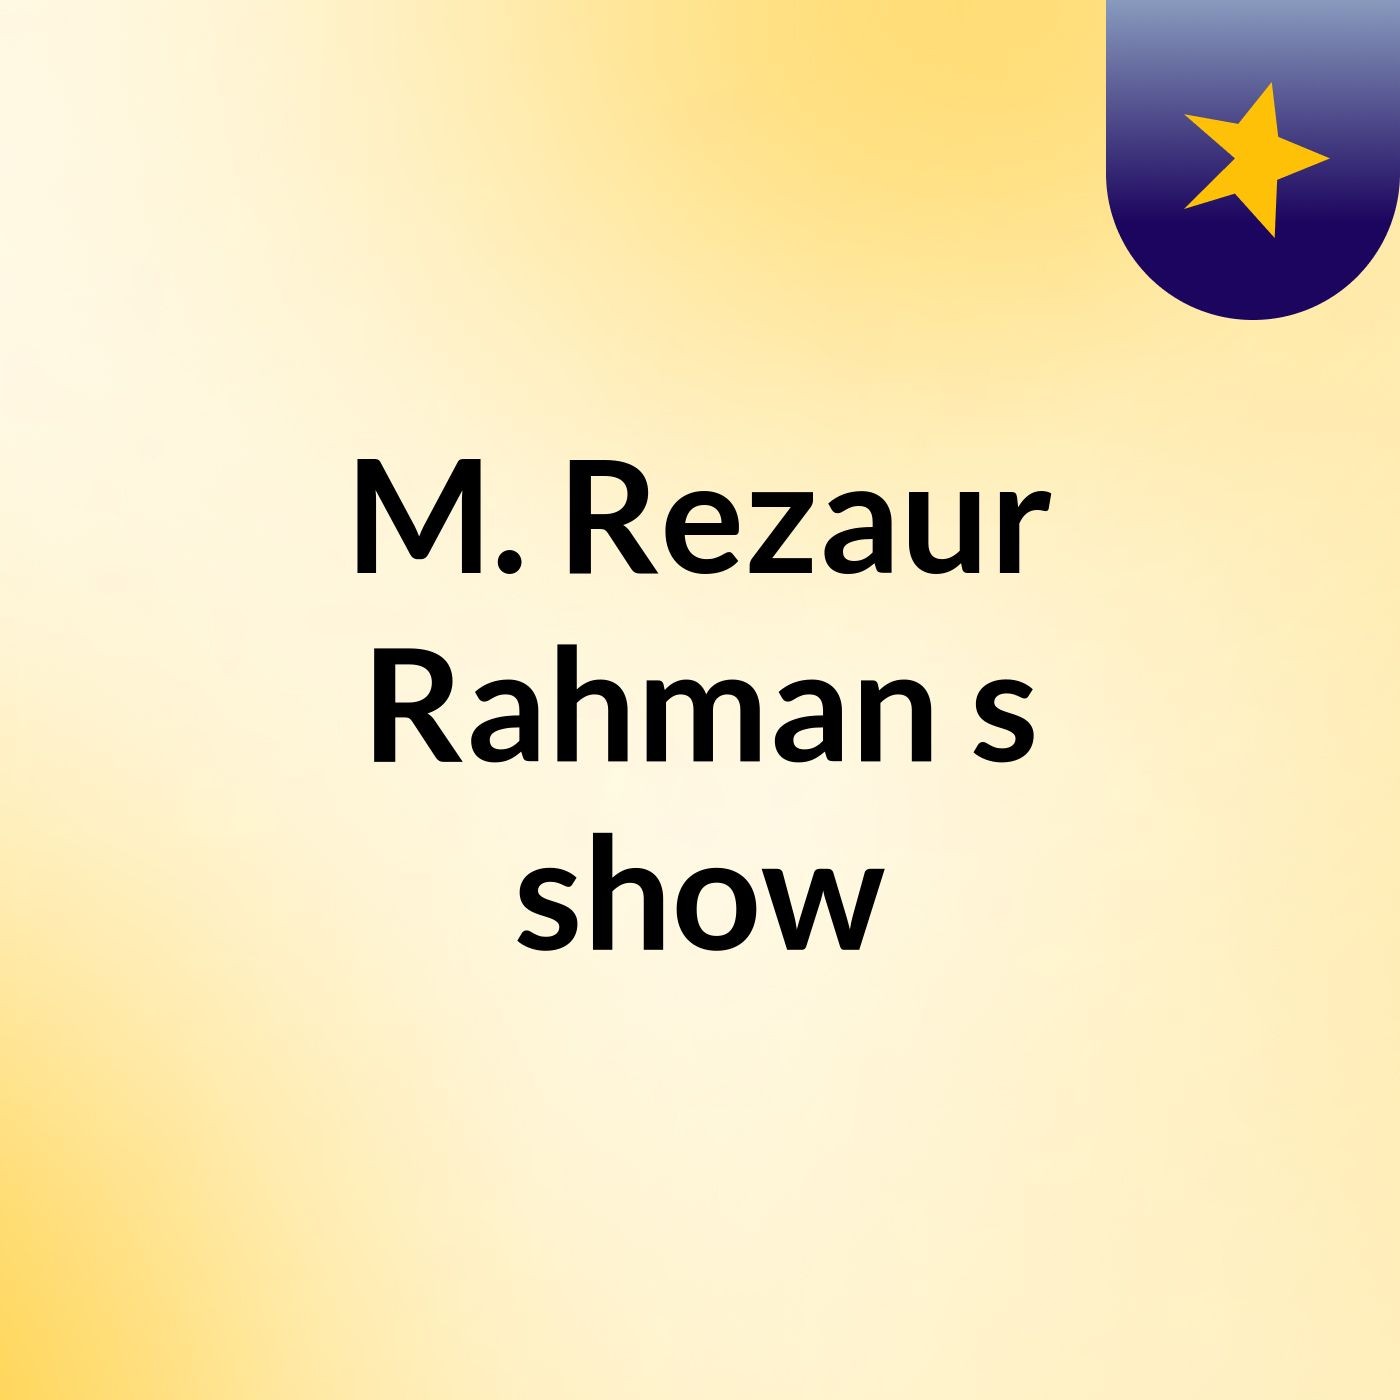 M. Rezaur Rahman's show